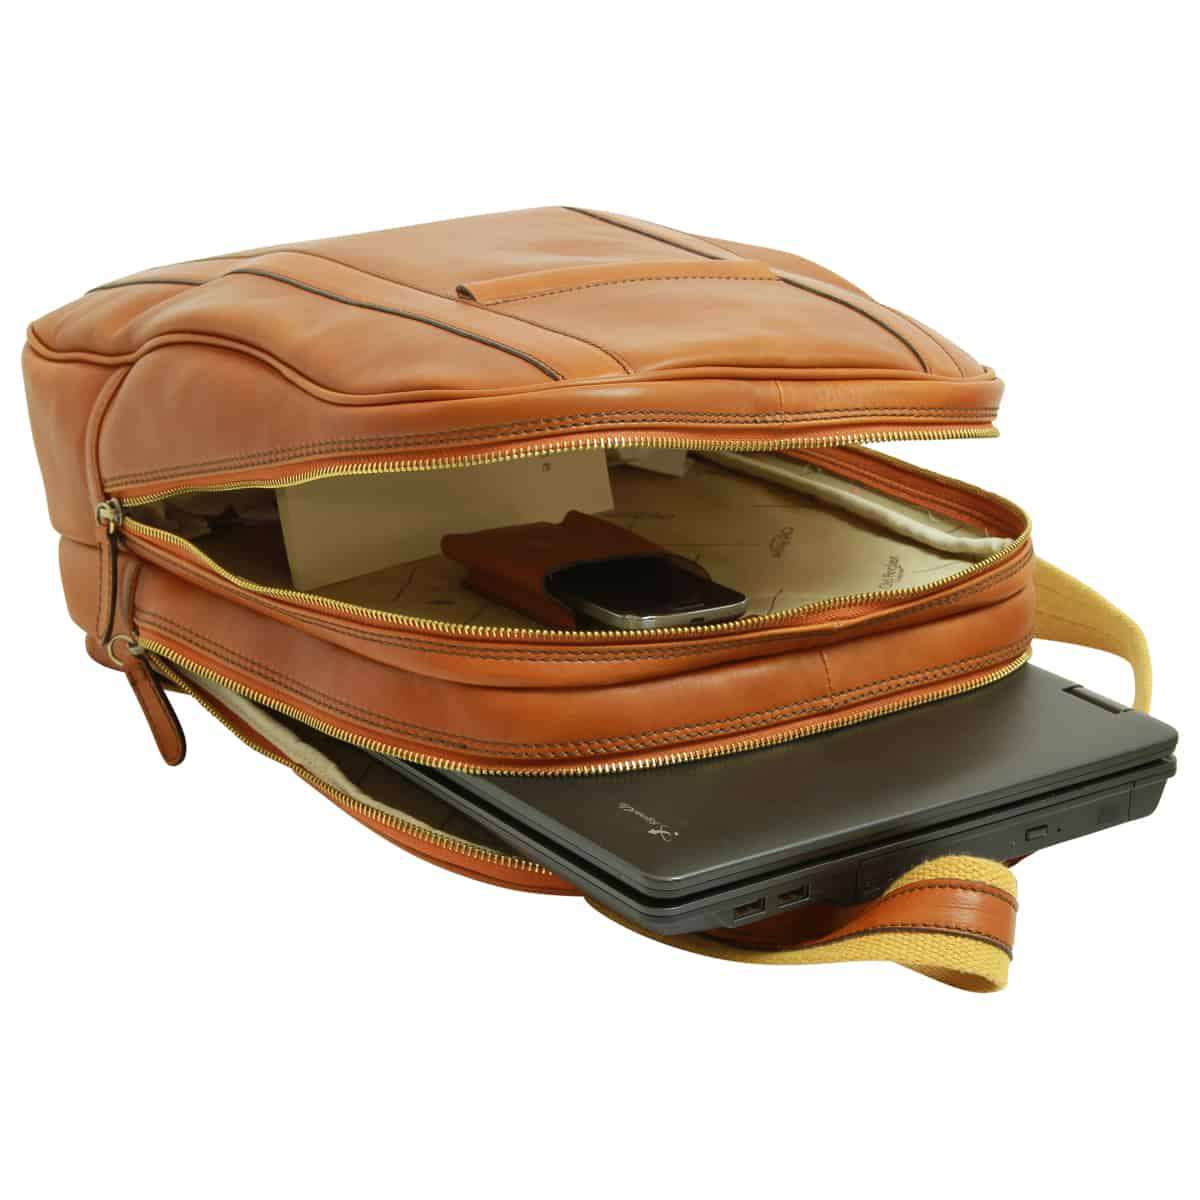 Soft Calfskin Leather Laptop Backpack - Gold | 031491CO | EURO | Old Angler Firenze